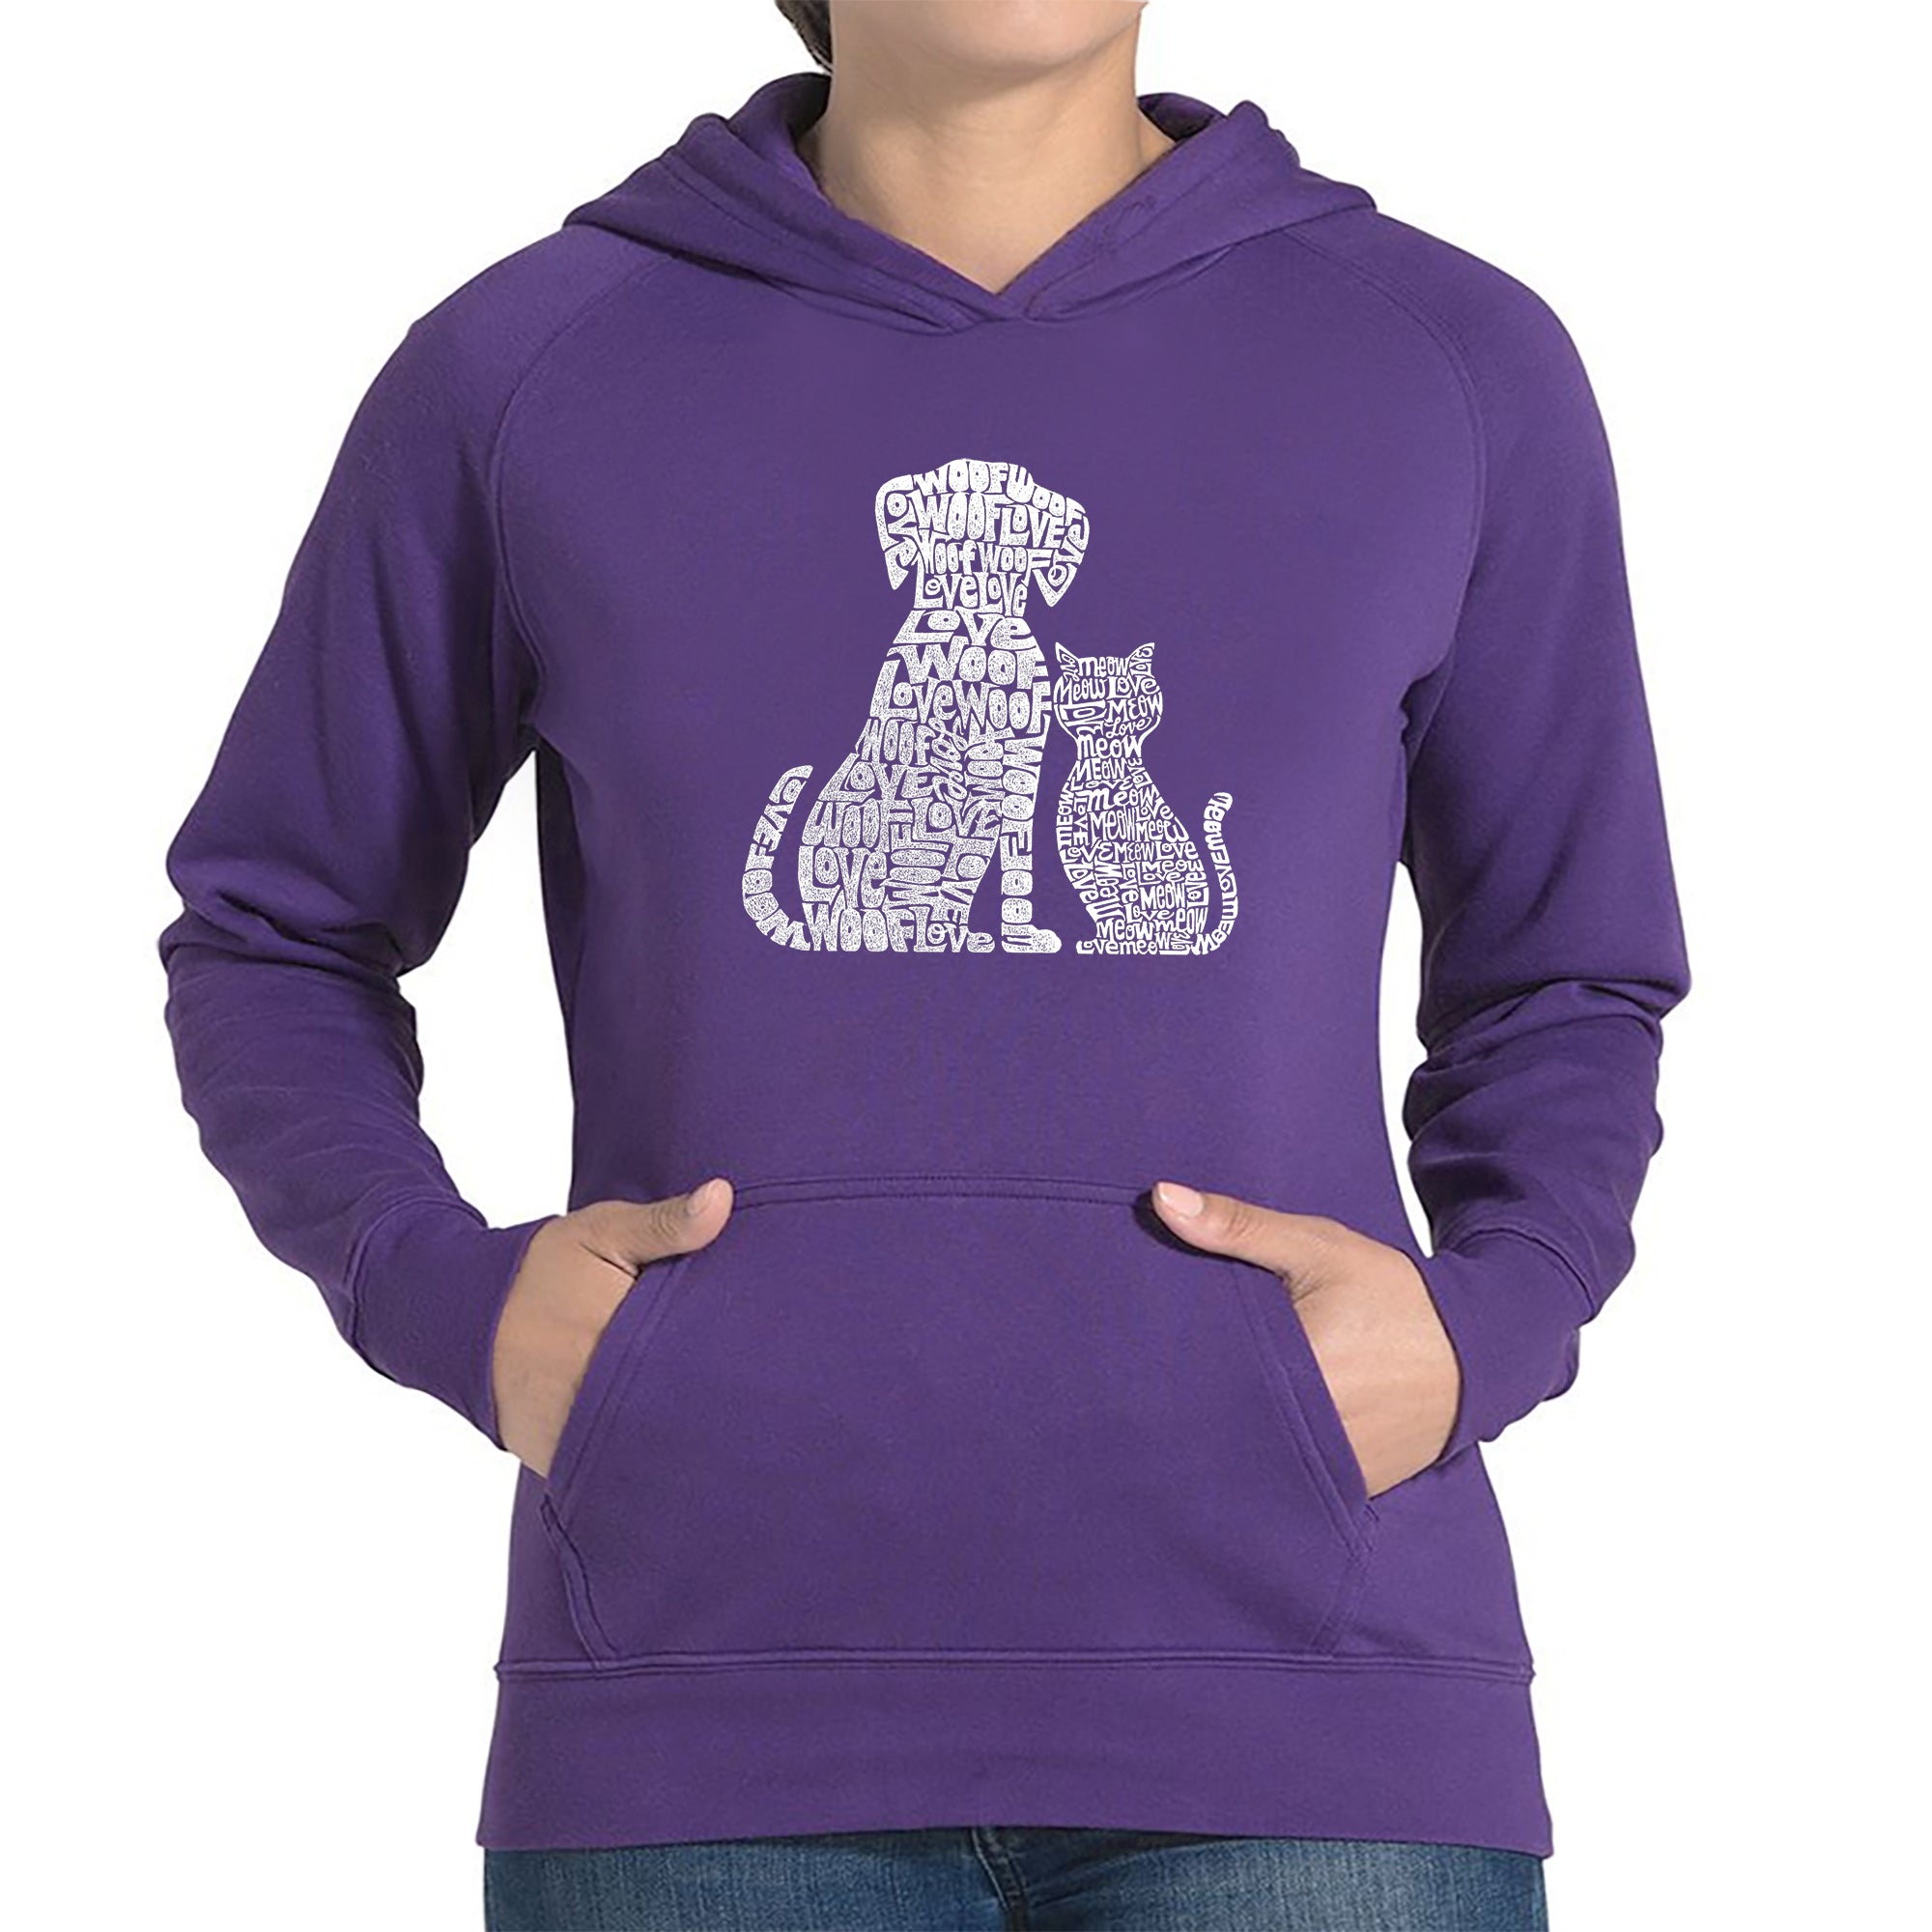 Dogs And Cats - Women's Word Art Hooded Sweatshirt - Purple - Large